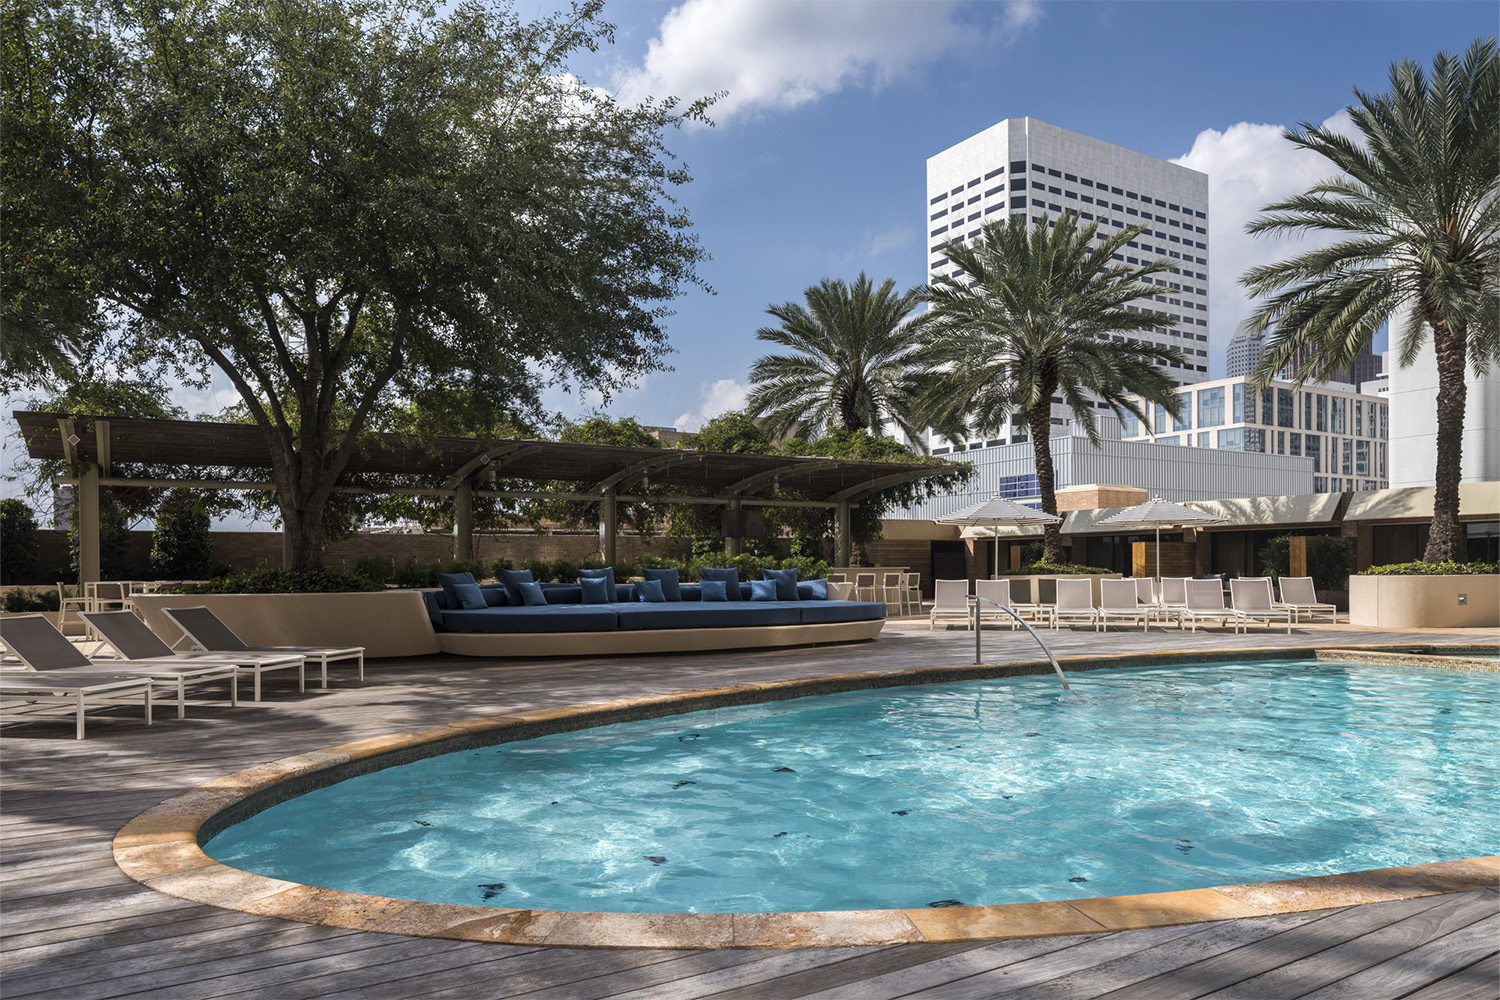 Four Seasons Hotel pool